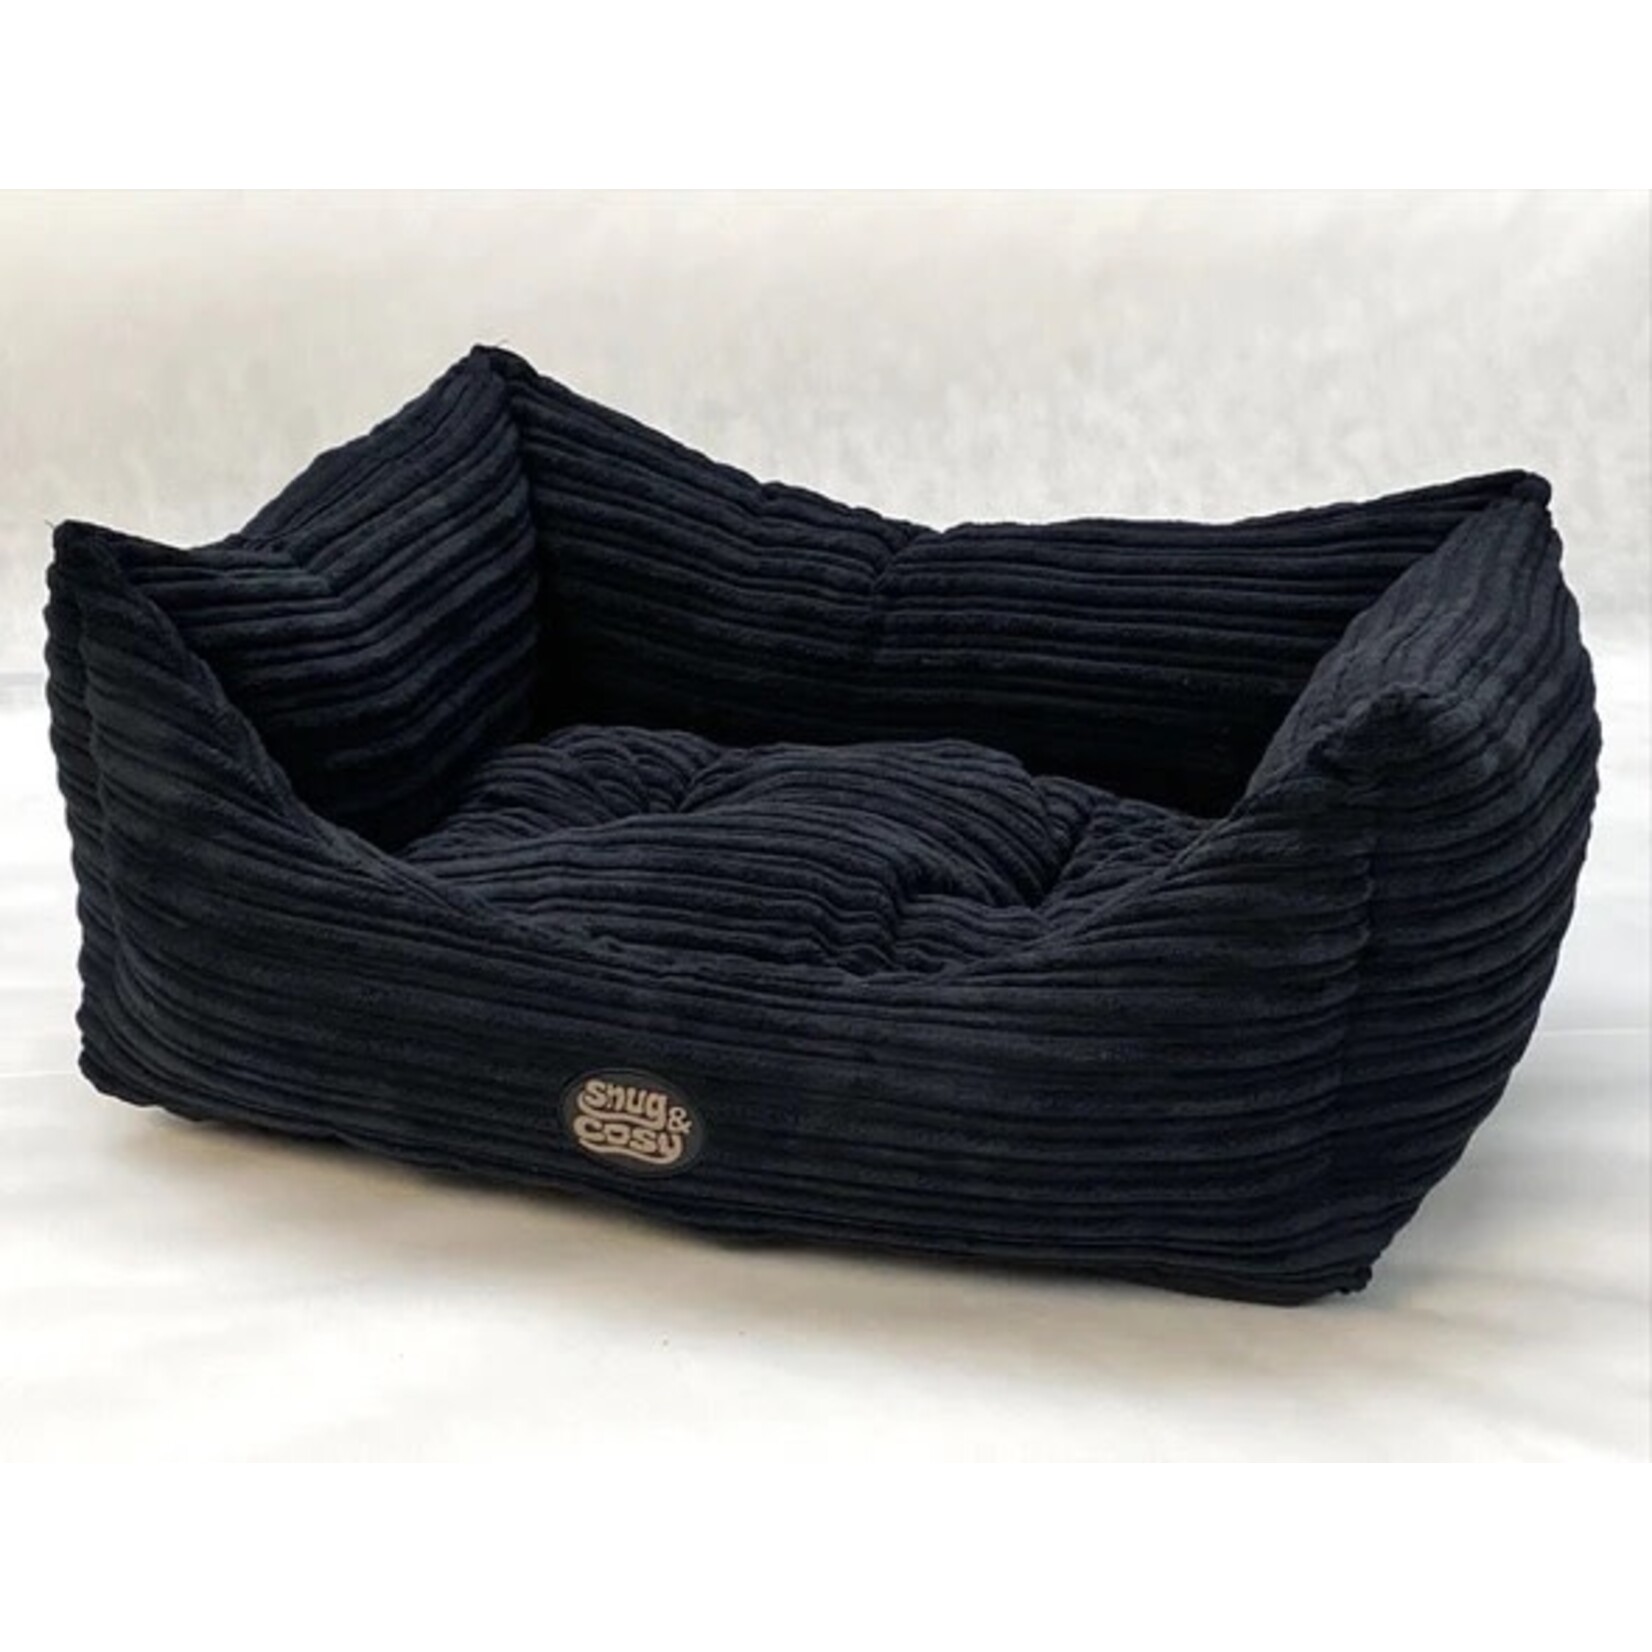 Snug & Cosy San Remo Chunky Cord Rectangular Dog Bed, Black